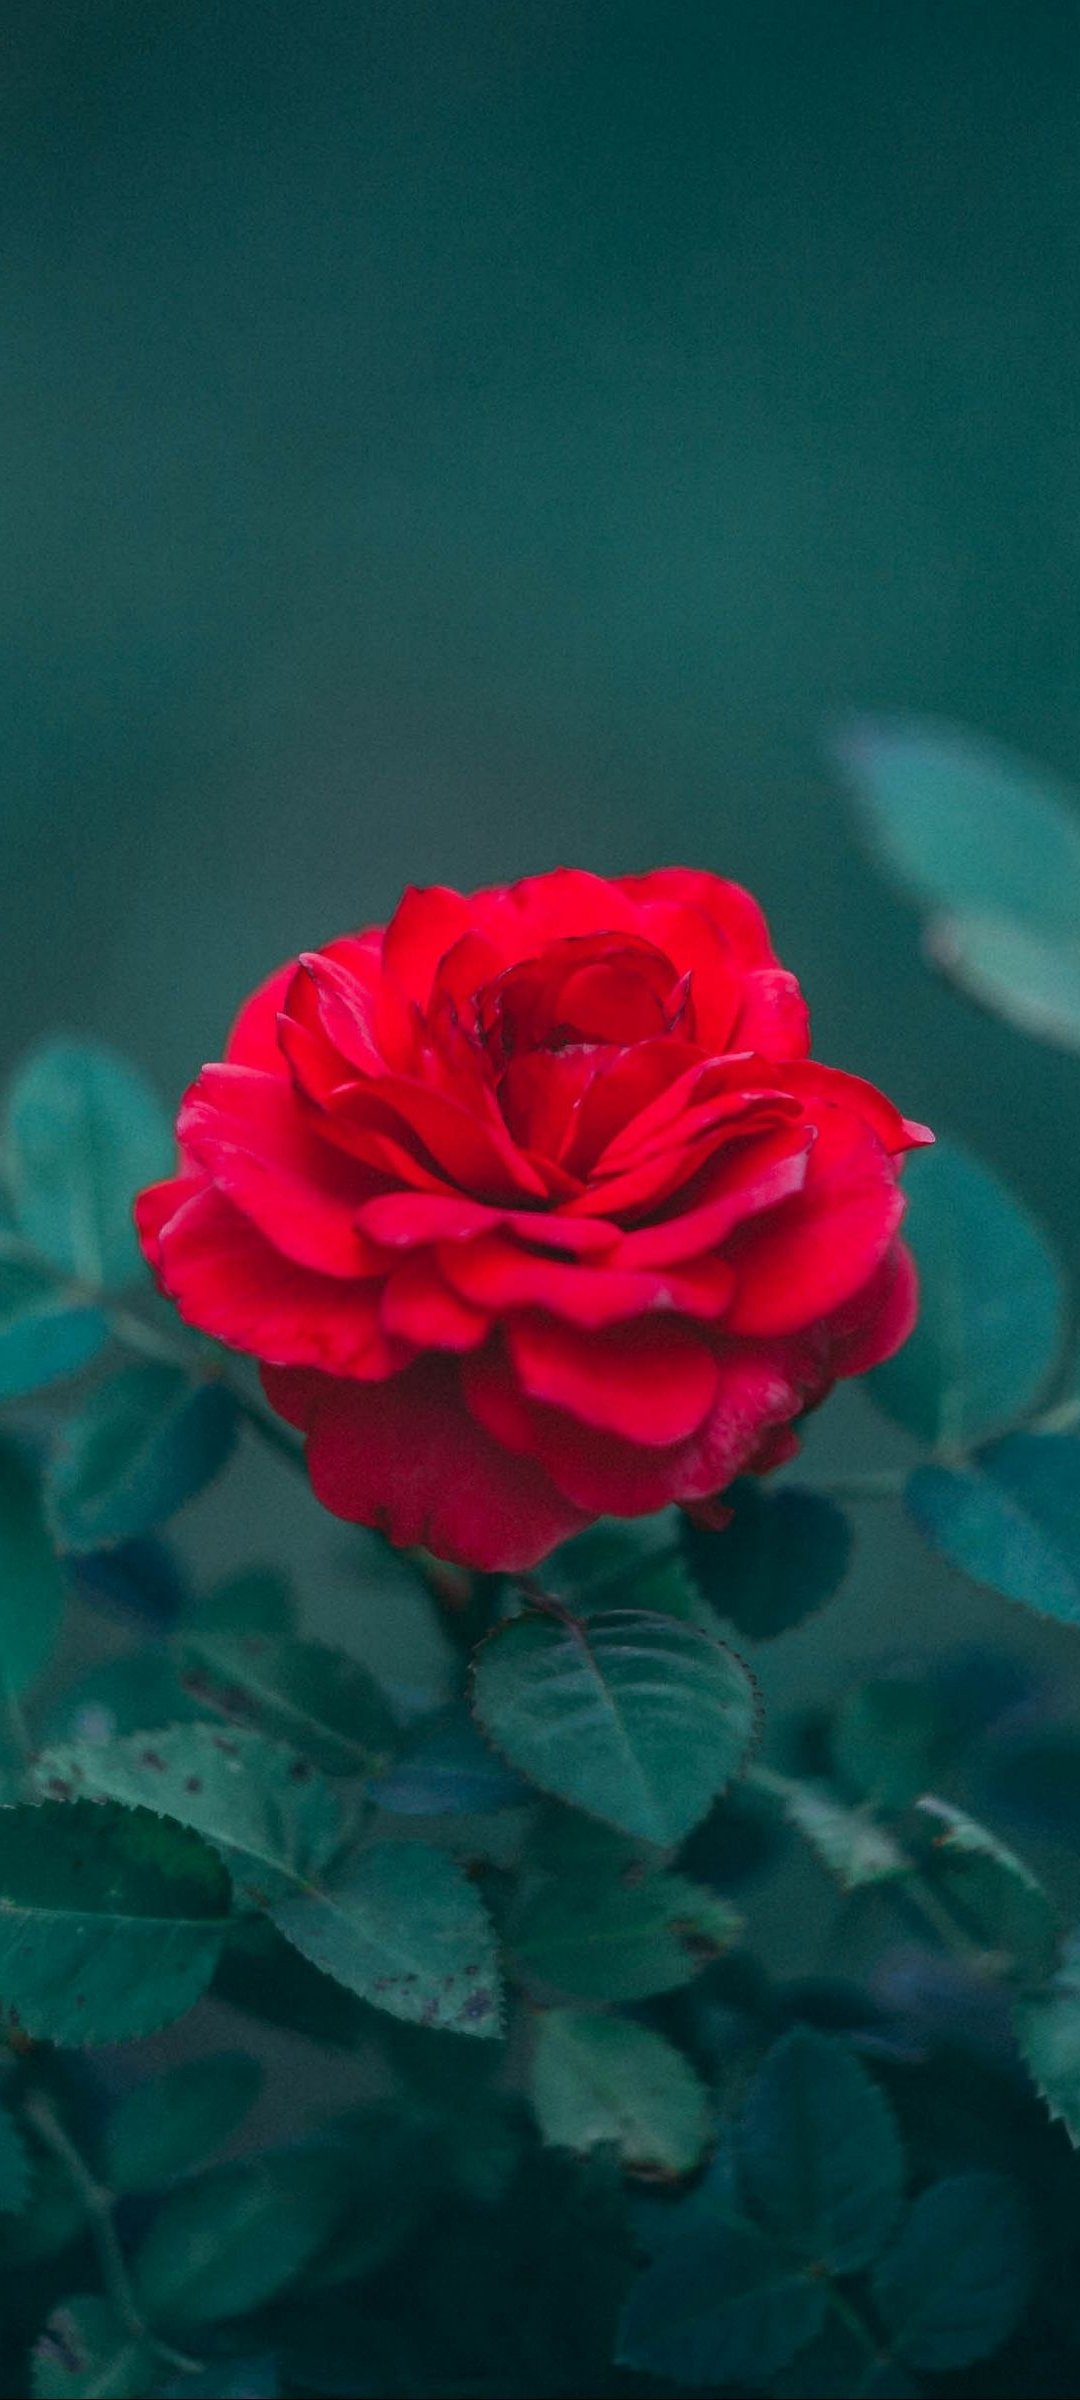 Wallpaper Rose Bud Drops Red Flower Wet  Red Rose Wallpaper Hd   3840x5760 Wallpaper  teahubio